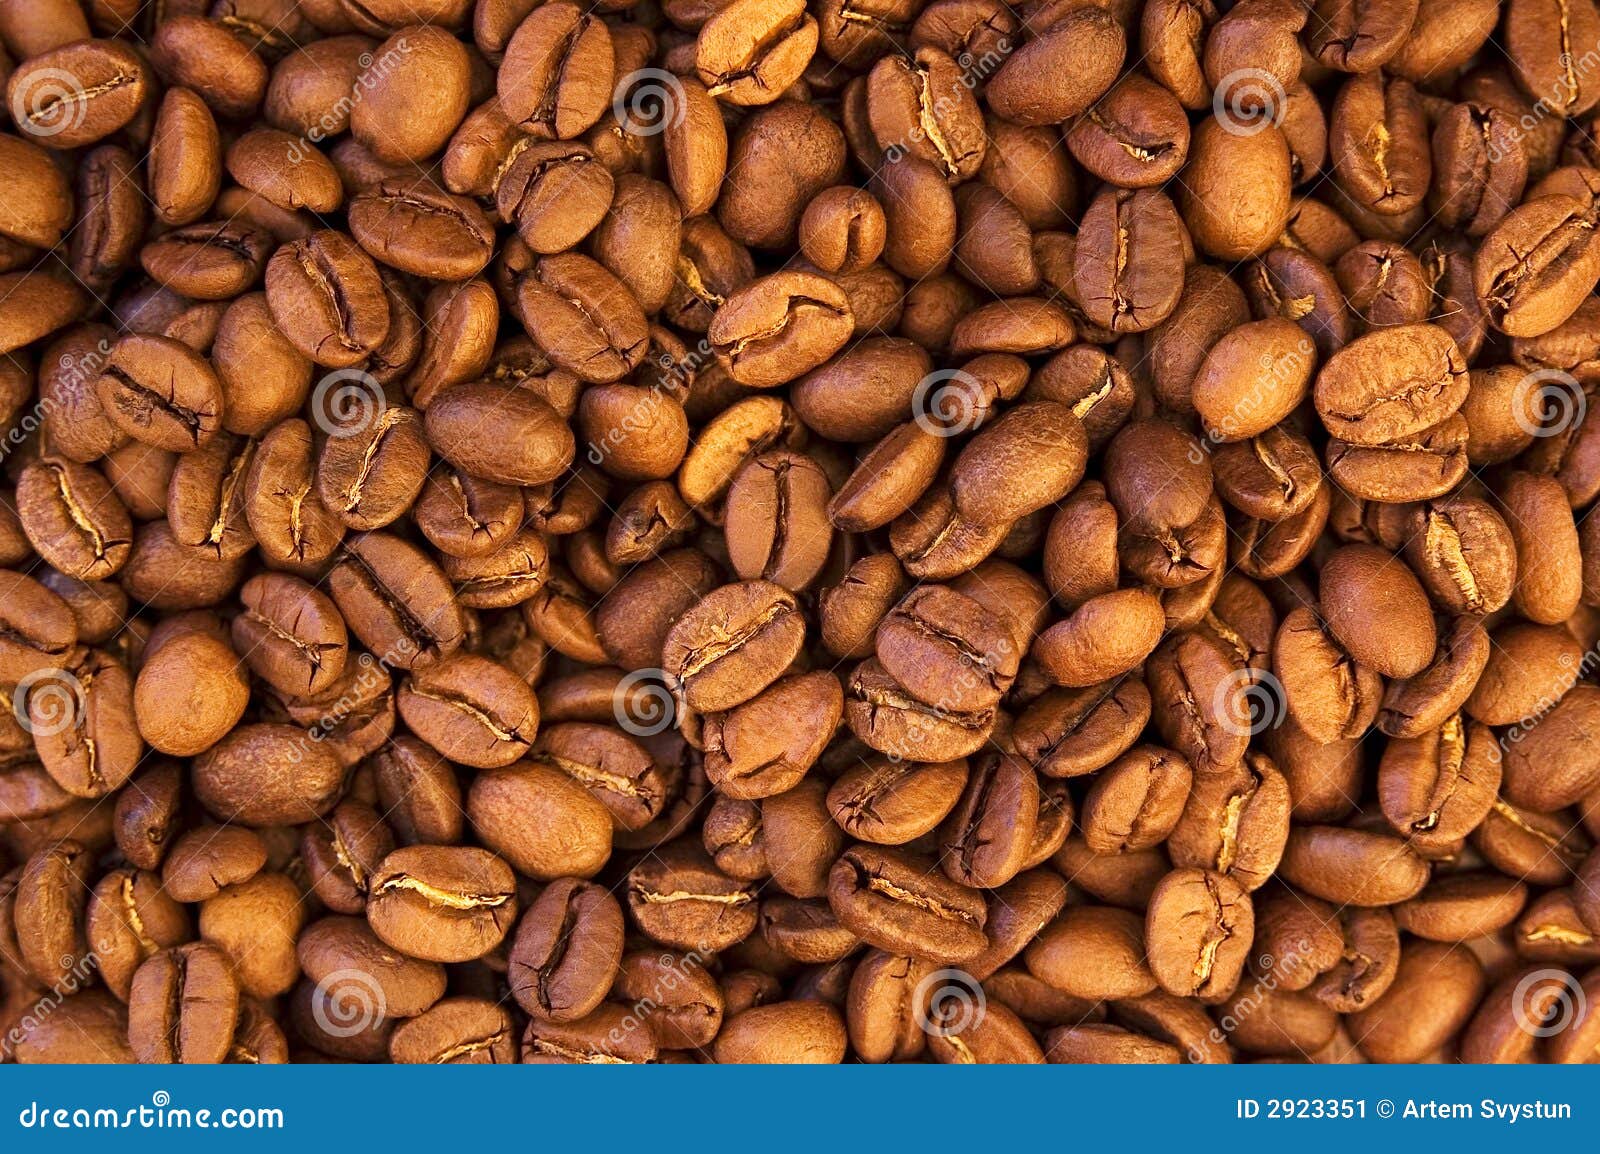 cofee beans theme